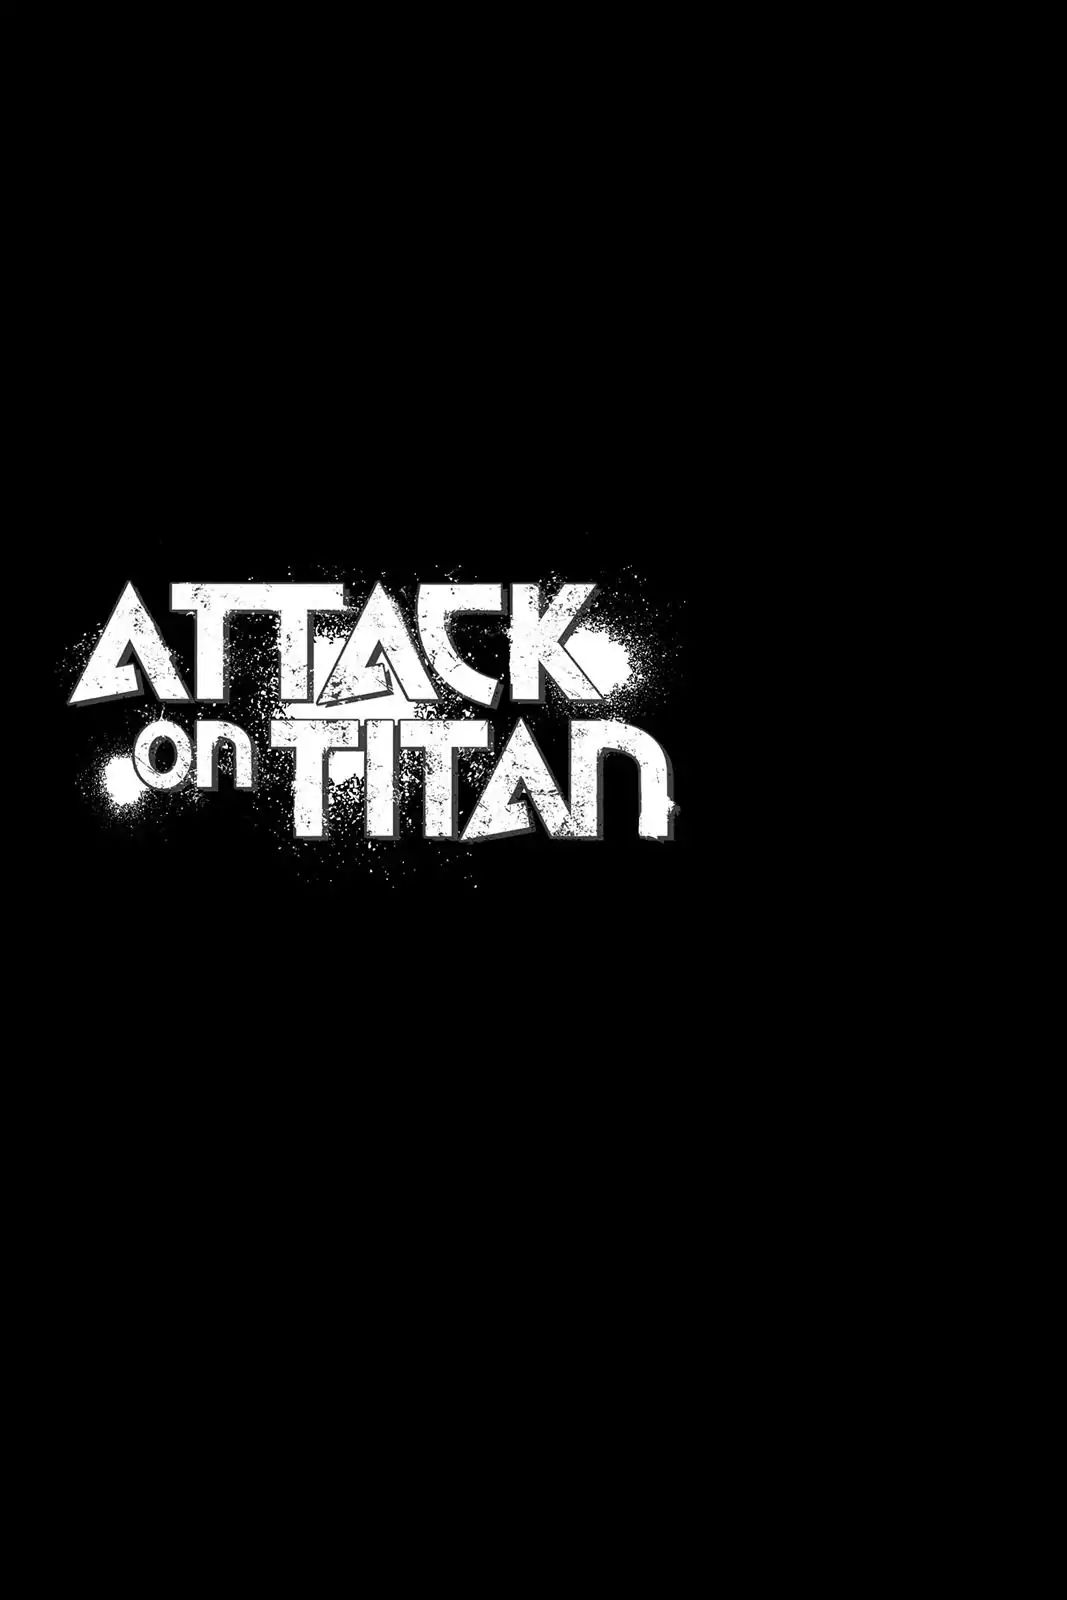 ttack on titan manga 139,attack on titan 139,attack on titan chapter 139,attack on titan final chapter,attack on titan manga ending